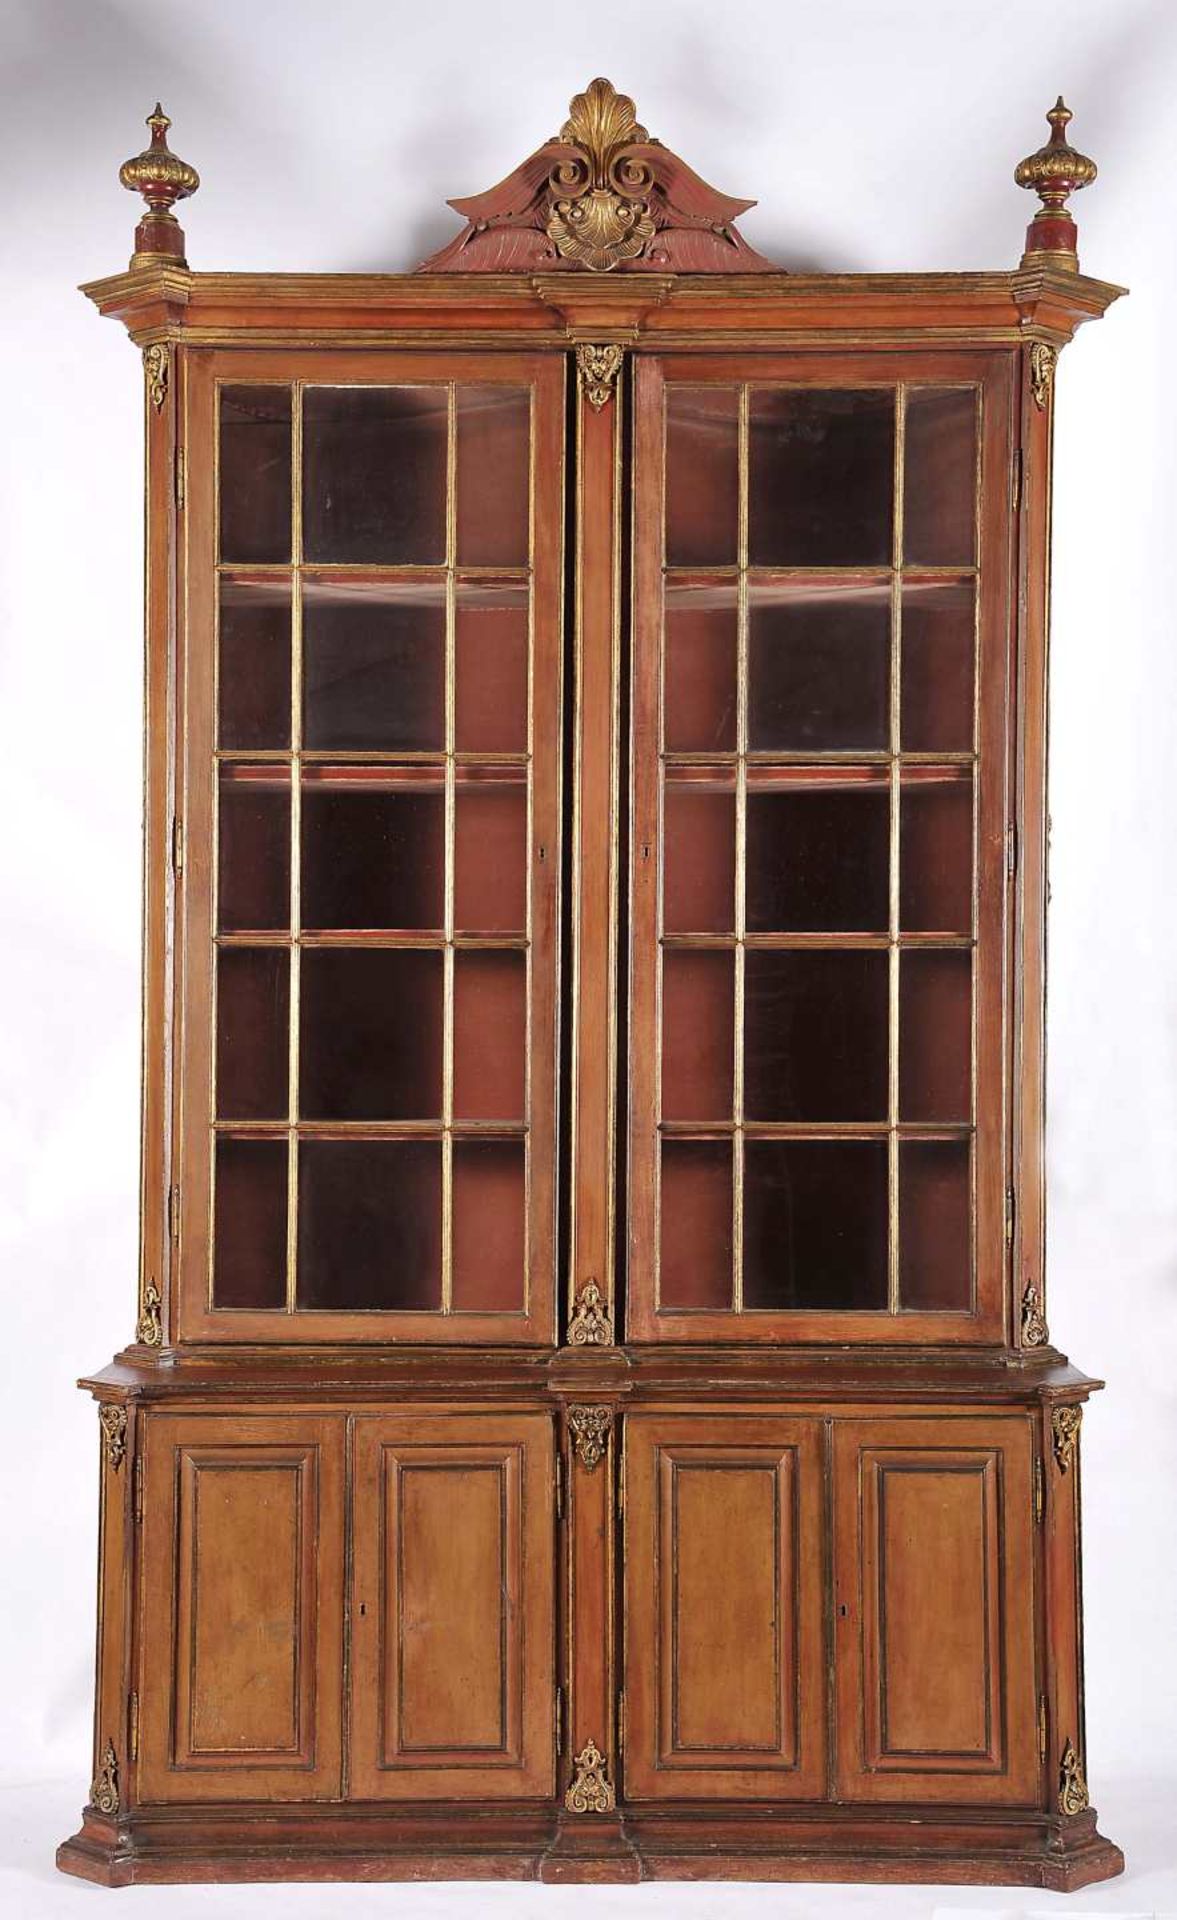 A bookcase cabinet